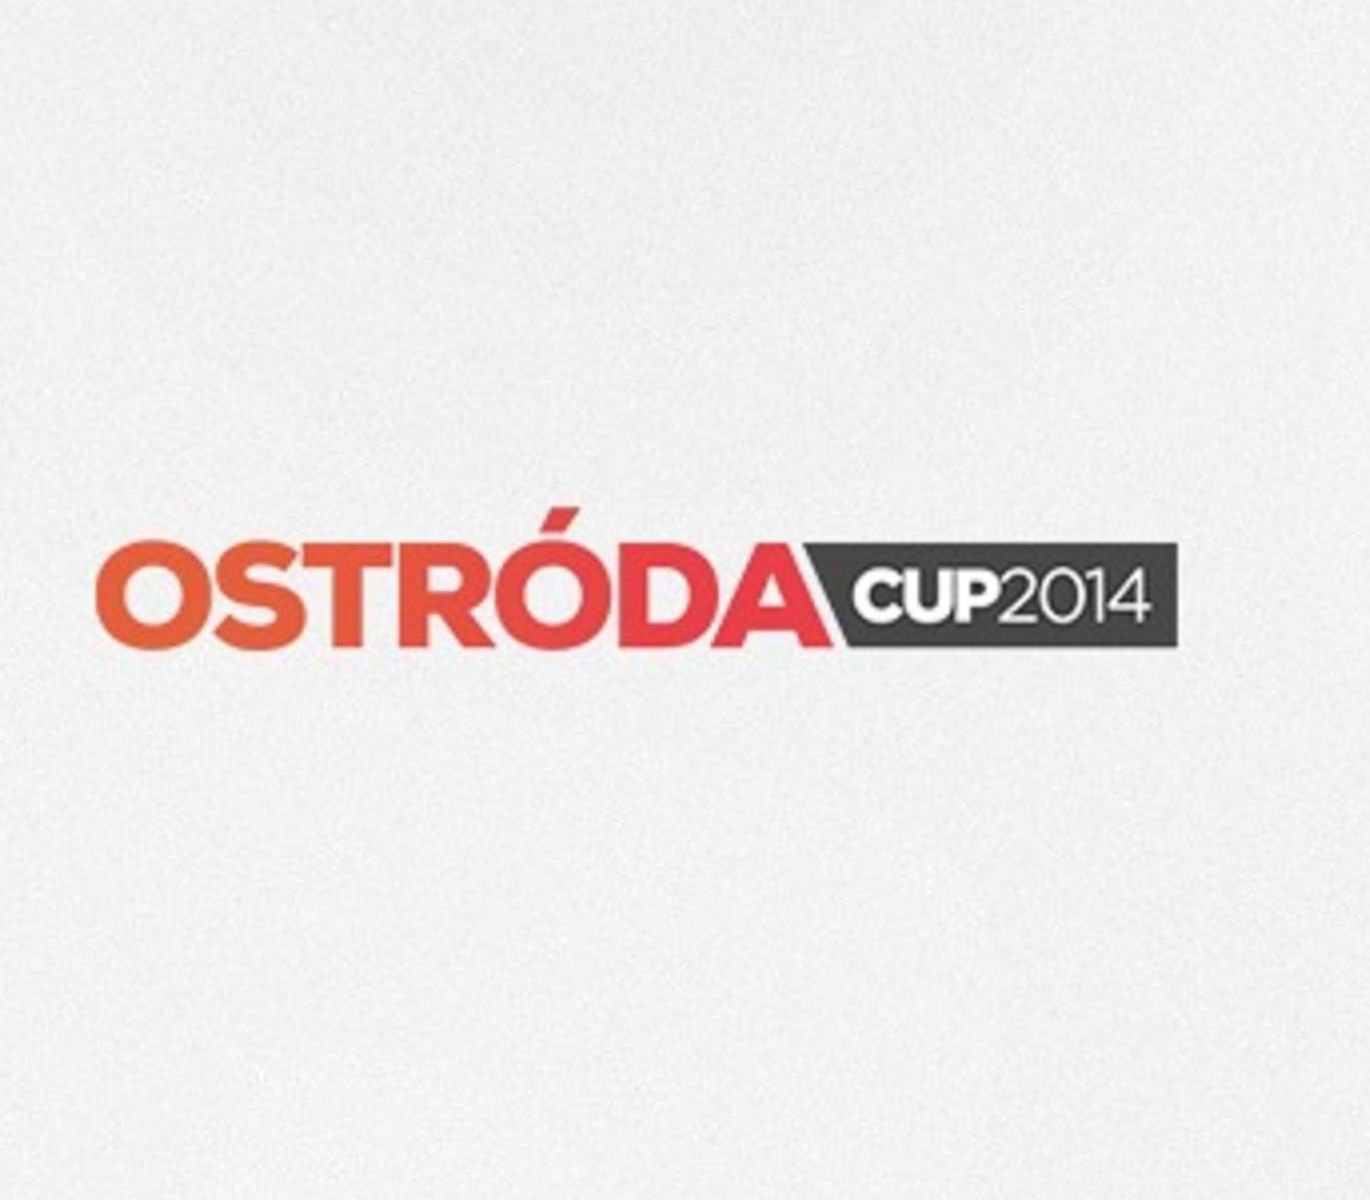 Tak wygląda logo Ostróda Cup 2014. Fot. Raf